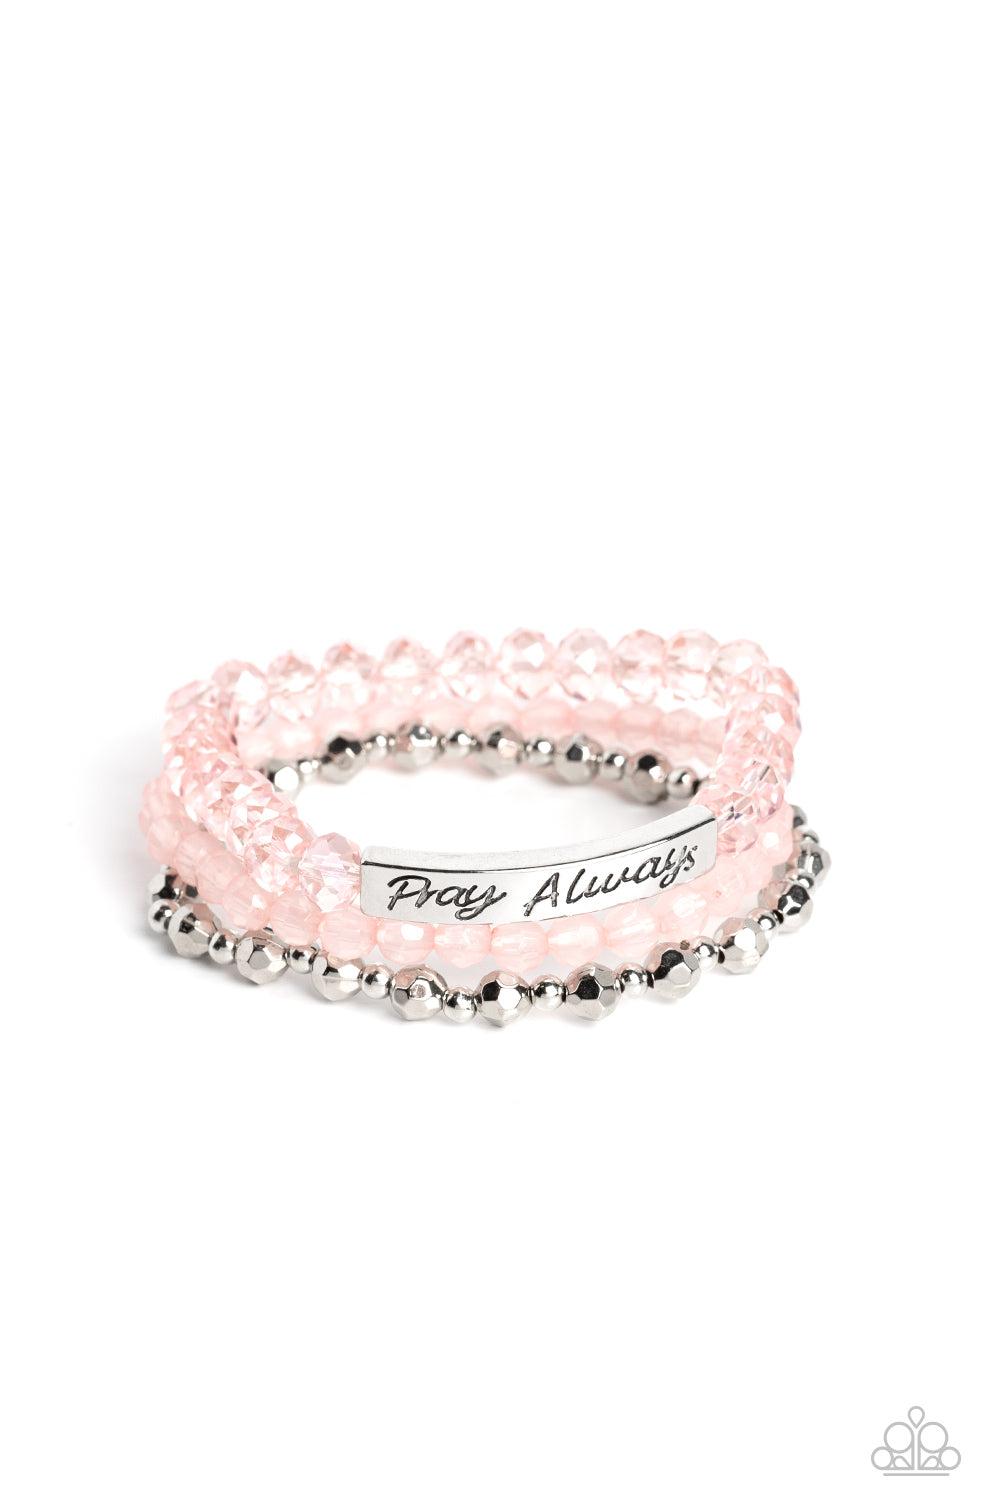 Pray Always Pink Inspirational Bracelet - Paparazzi Accessories- lightbox - CarasShop.com - $5 Jewelry by Cara Jewels